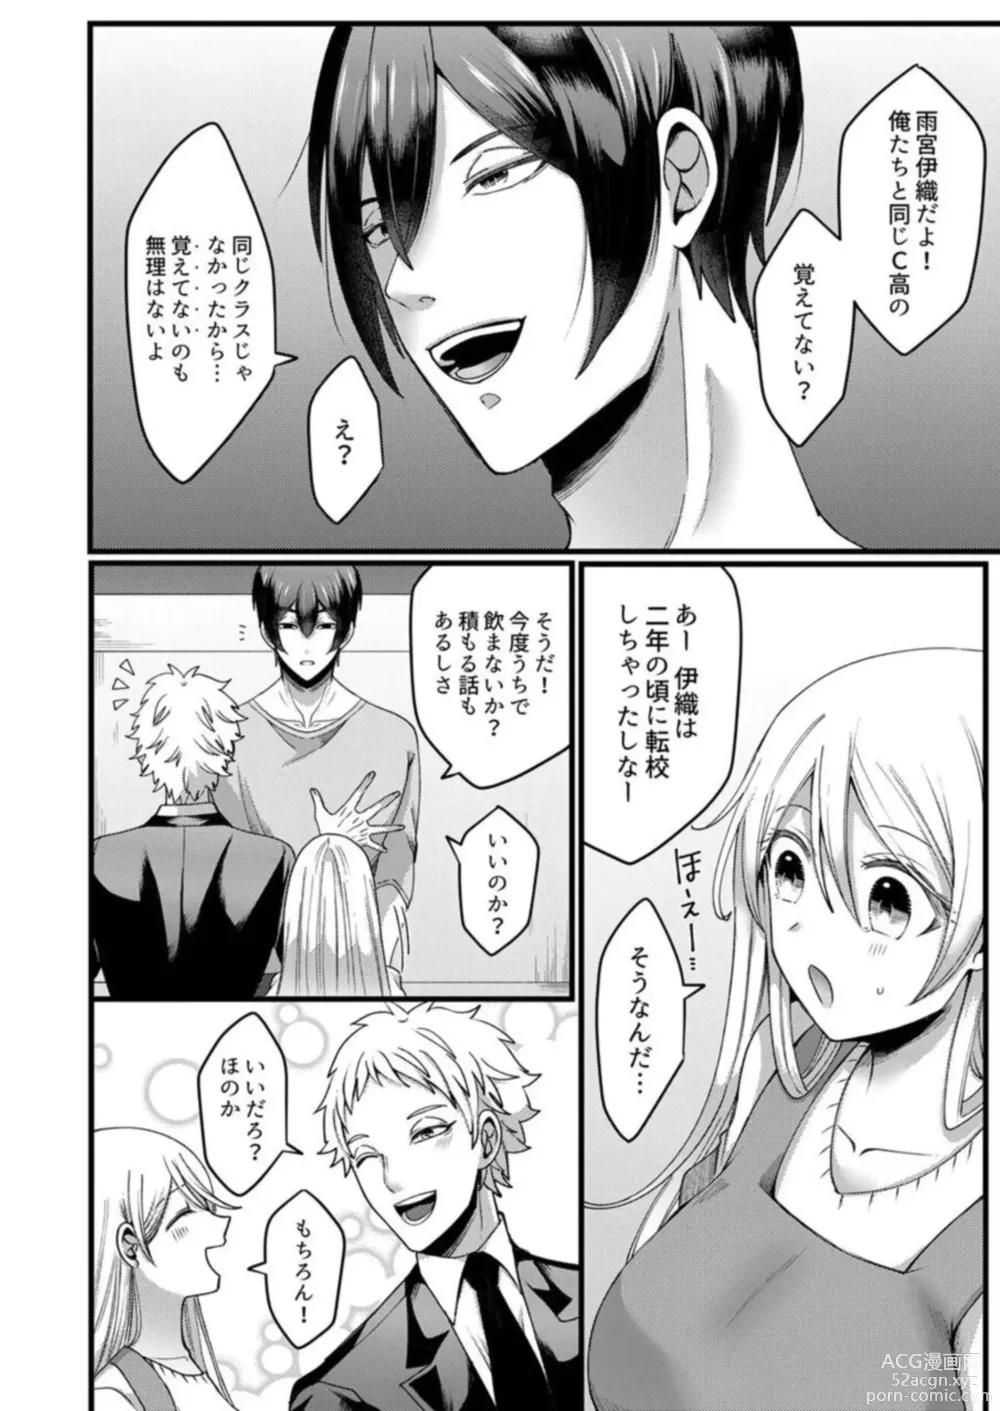 Page 6 of manga Kyohiken Nante Nain da Yo